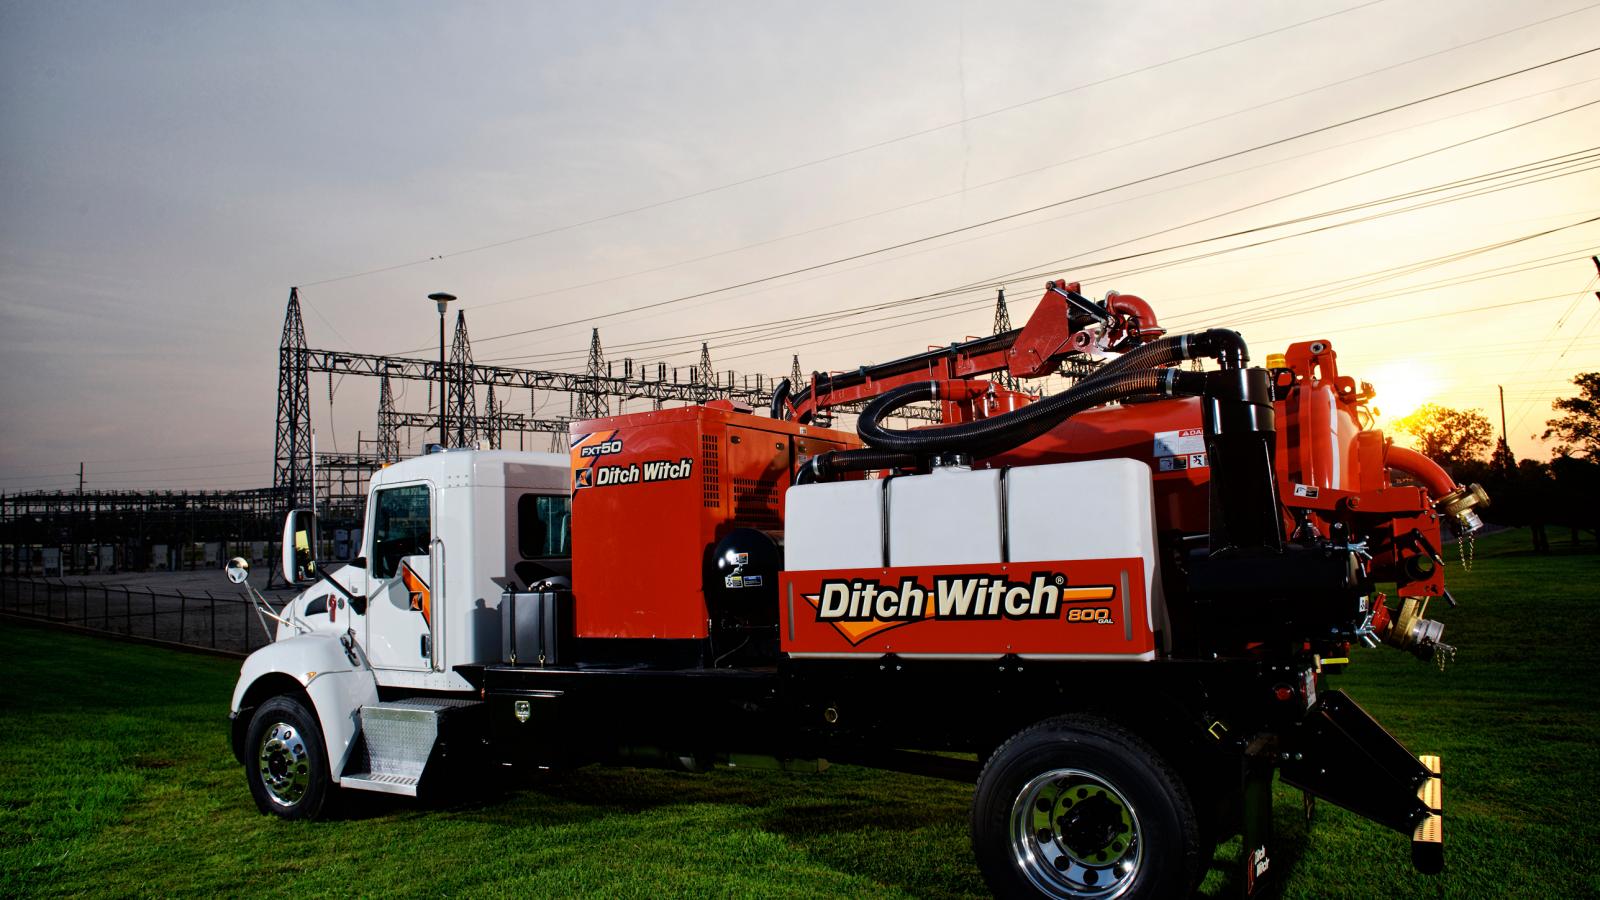 Excavadora con aspiradora montada en camión FXT50 Ditch Witch